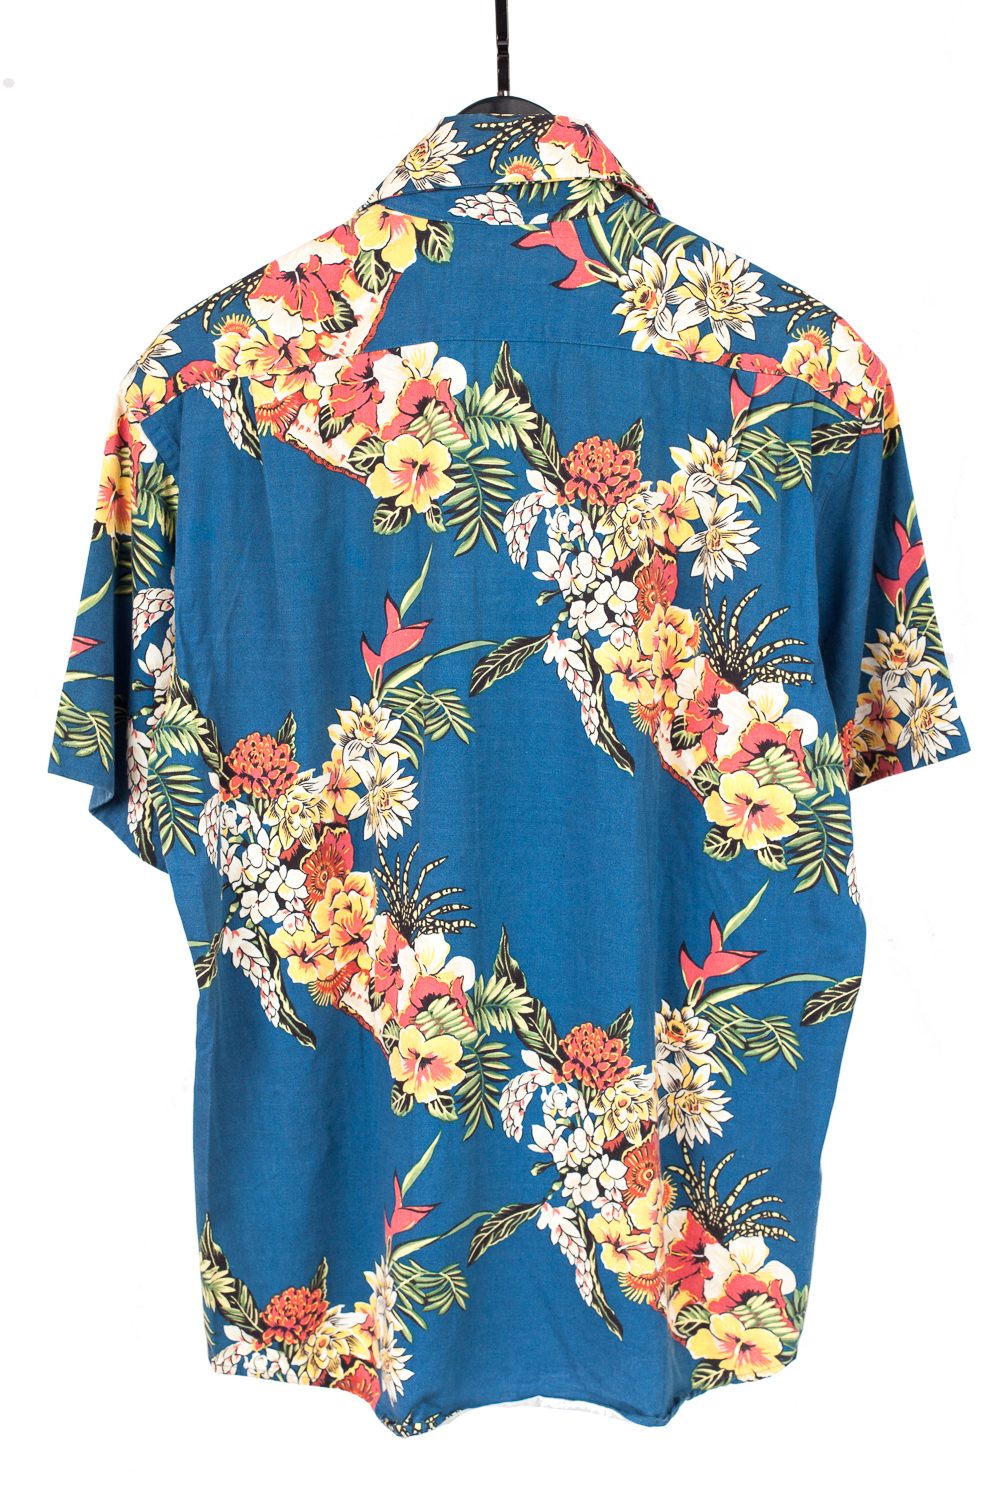 SS97 Floral Rayon/Cotton Hawaiin